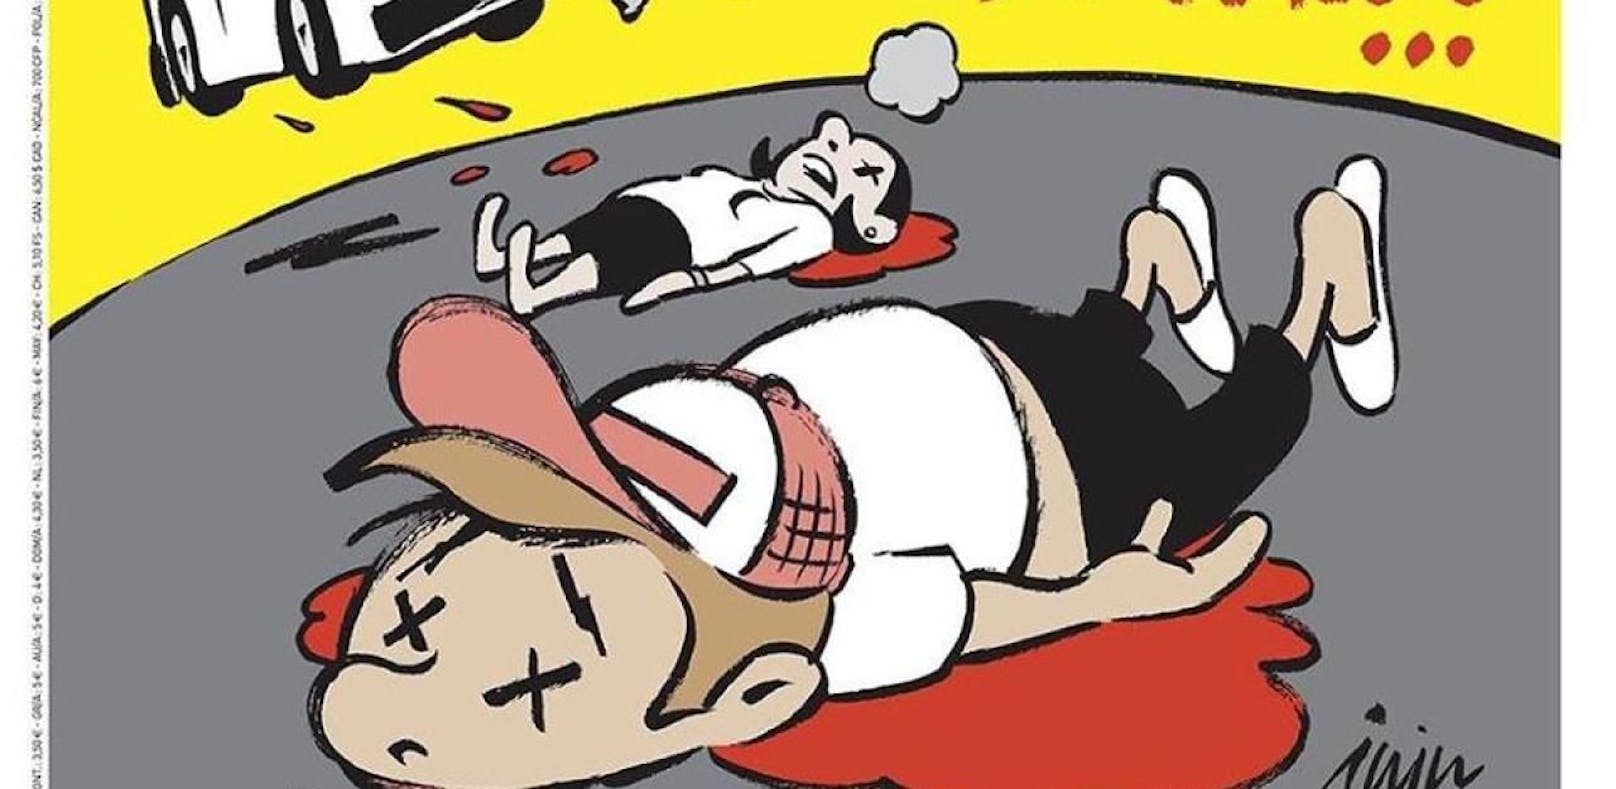 Charlie Hebdo provoziert mit brutalem Cover